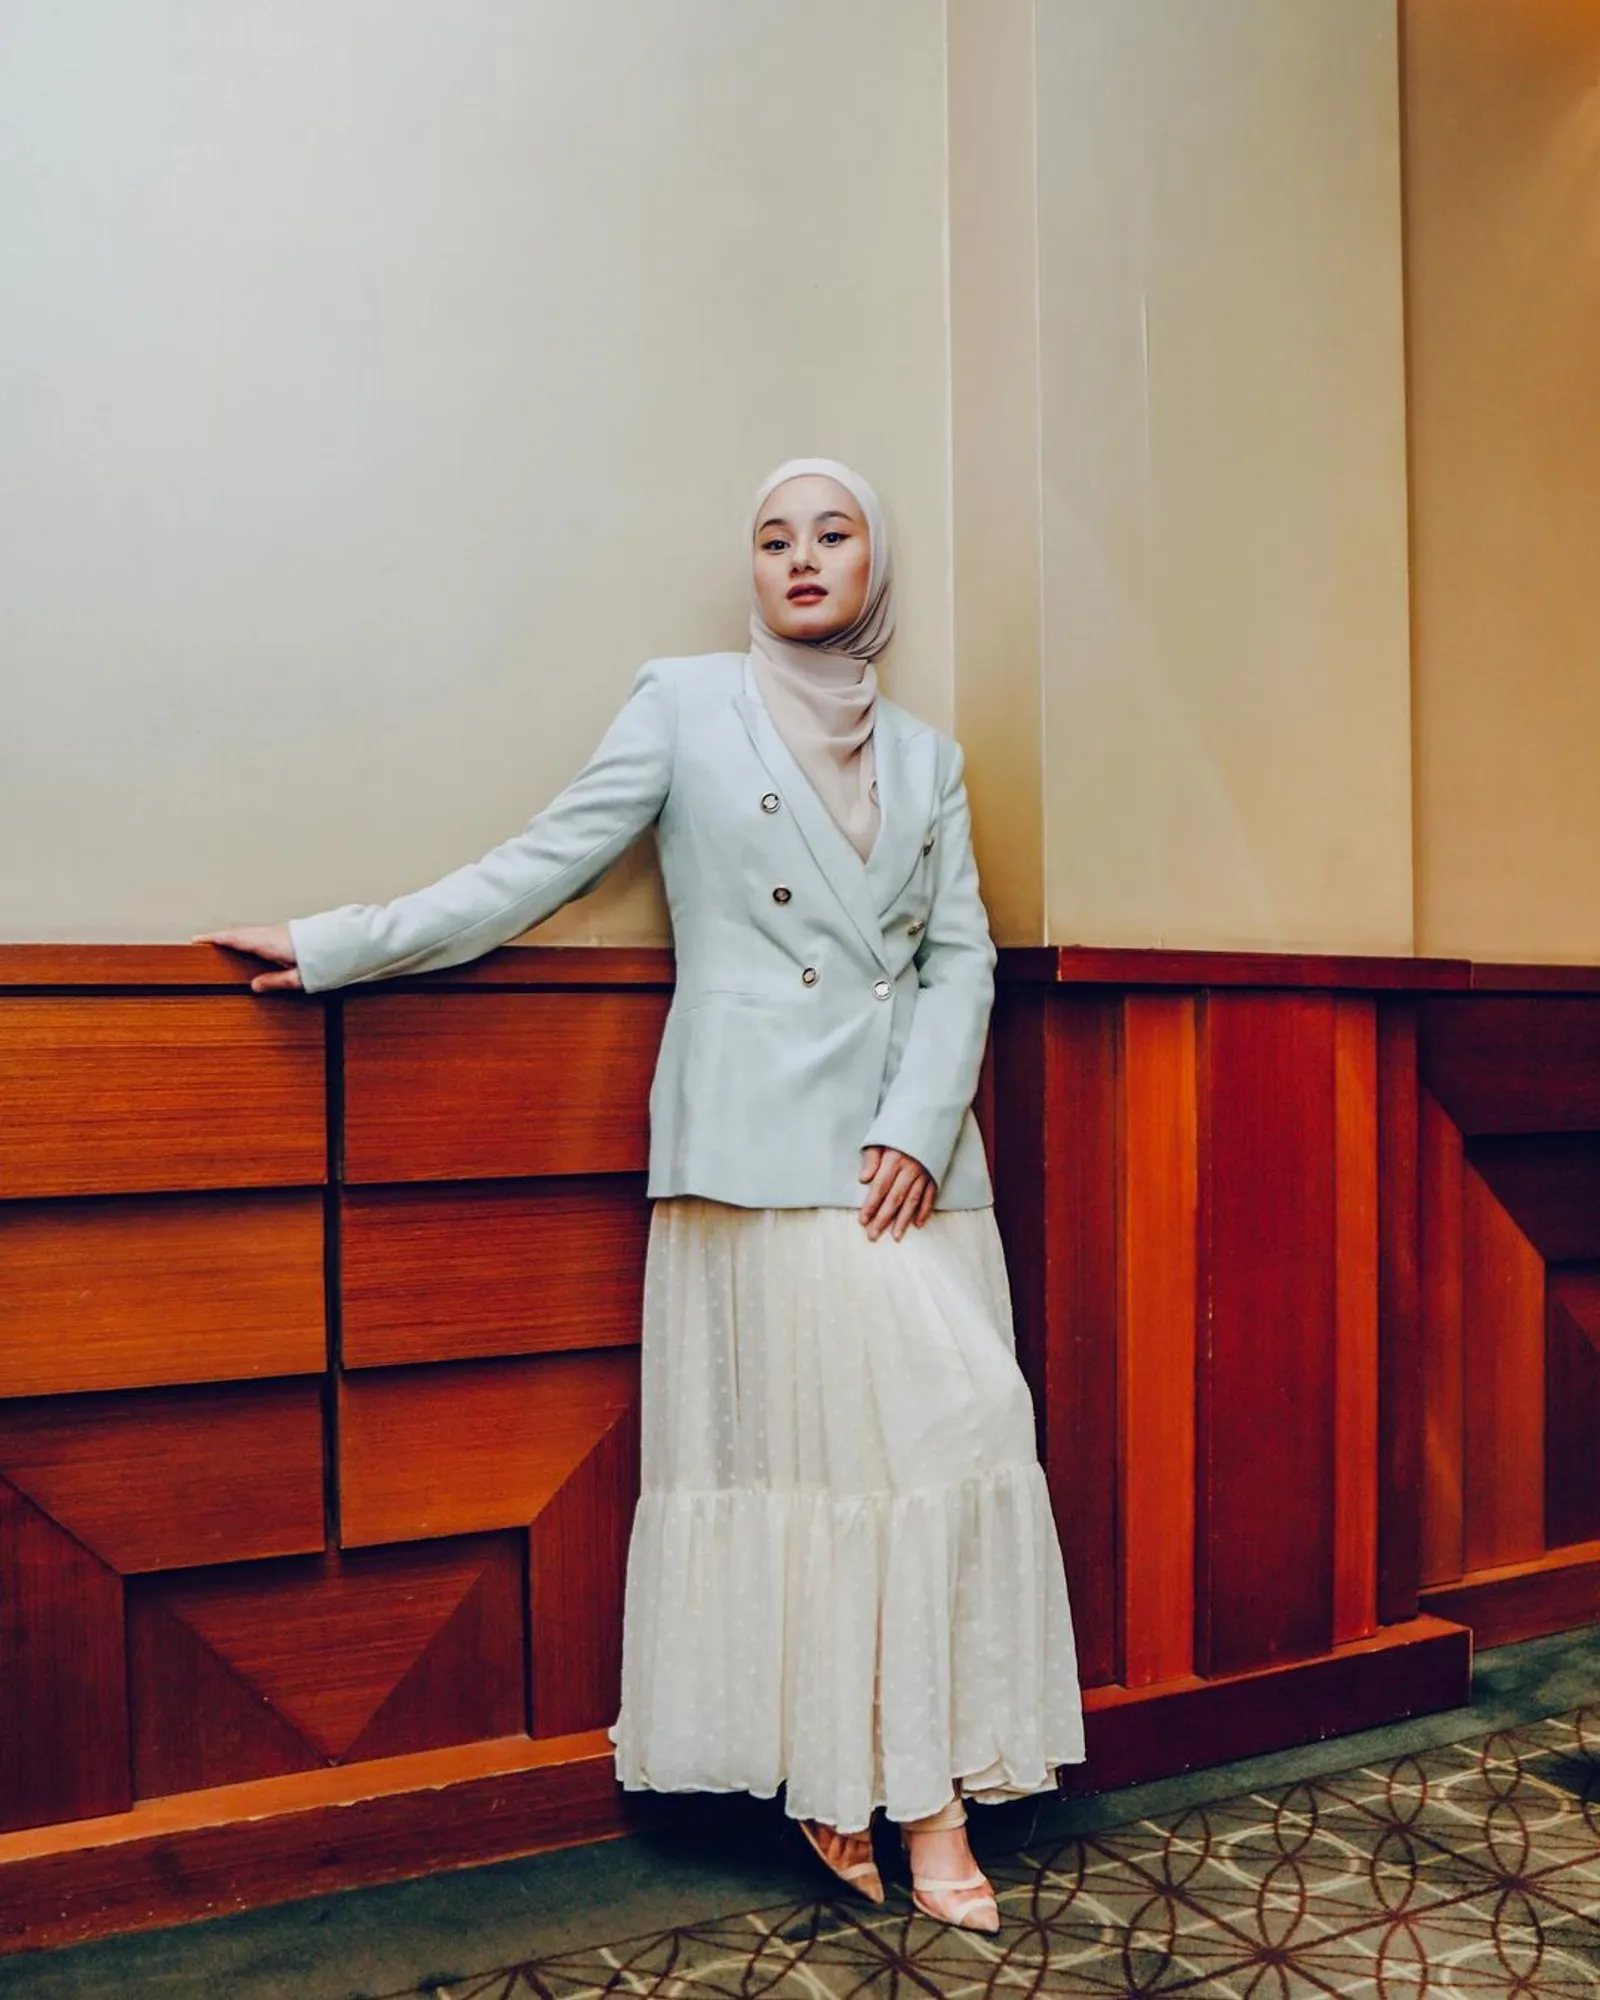 Referensi Outfit Hijab untuk Office Look a La Seleb Tanah Air